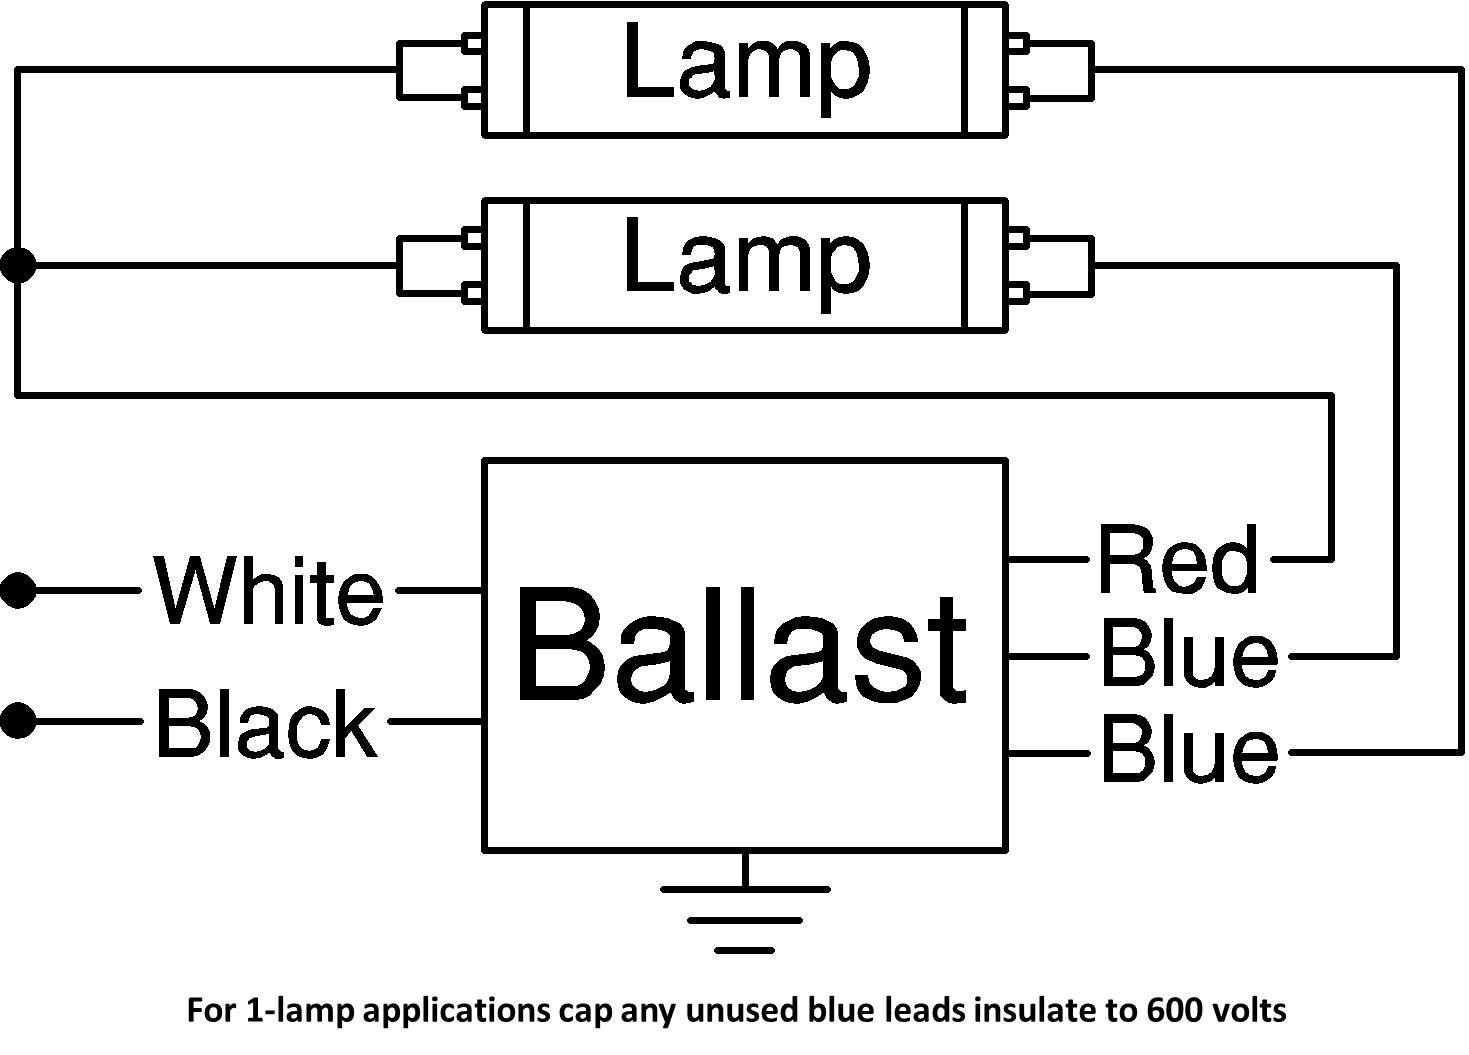 4 foot 2 lamp ballast wiring diagram illustration wiring diagram u2022 rh yesonm info Instant Start